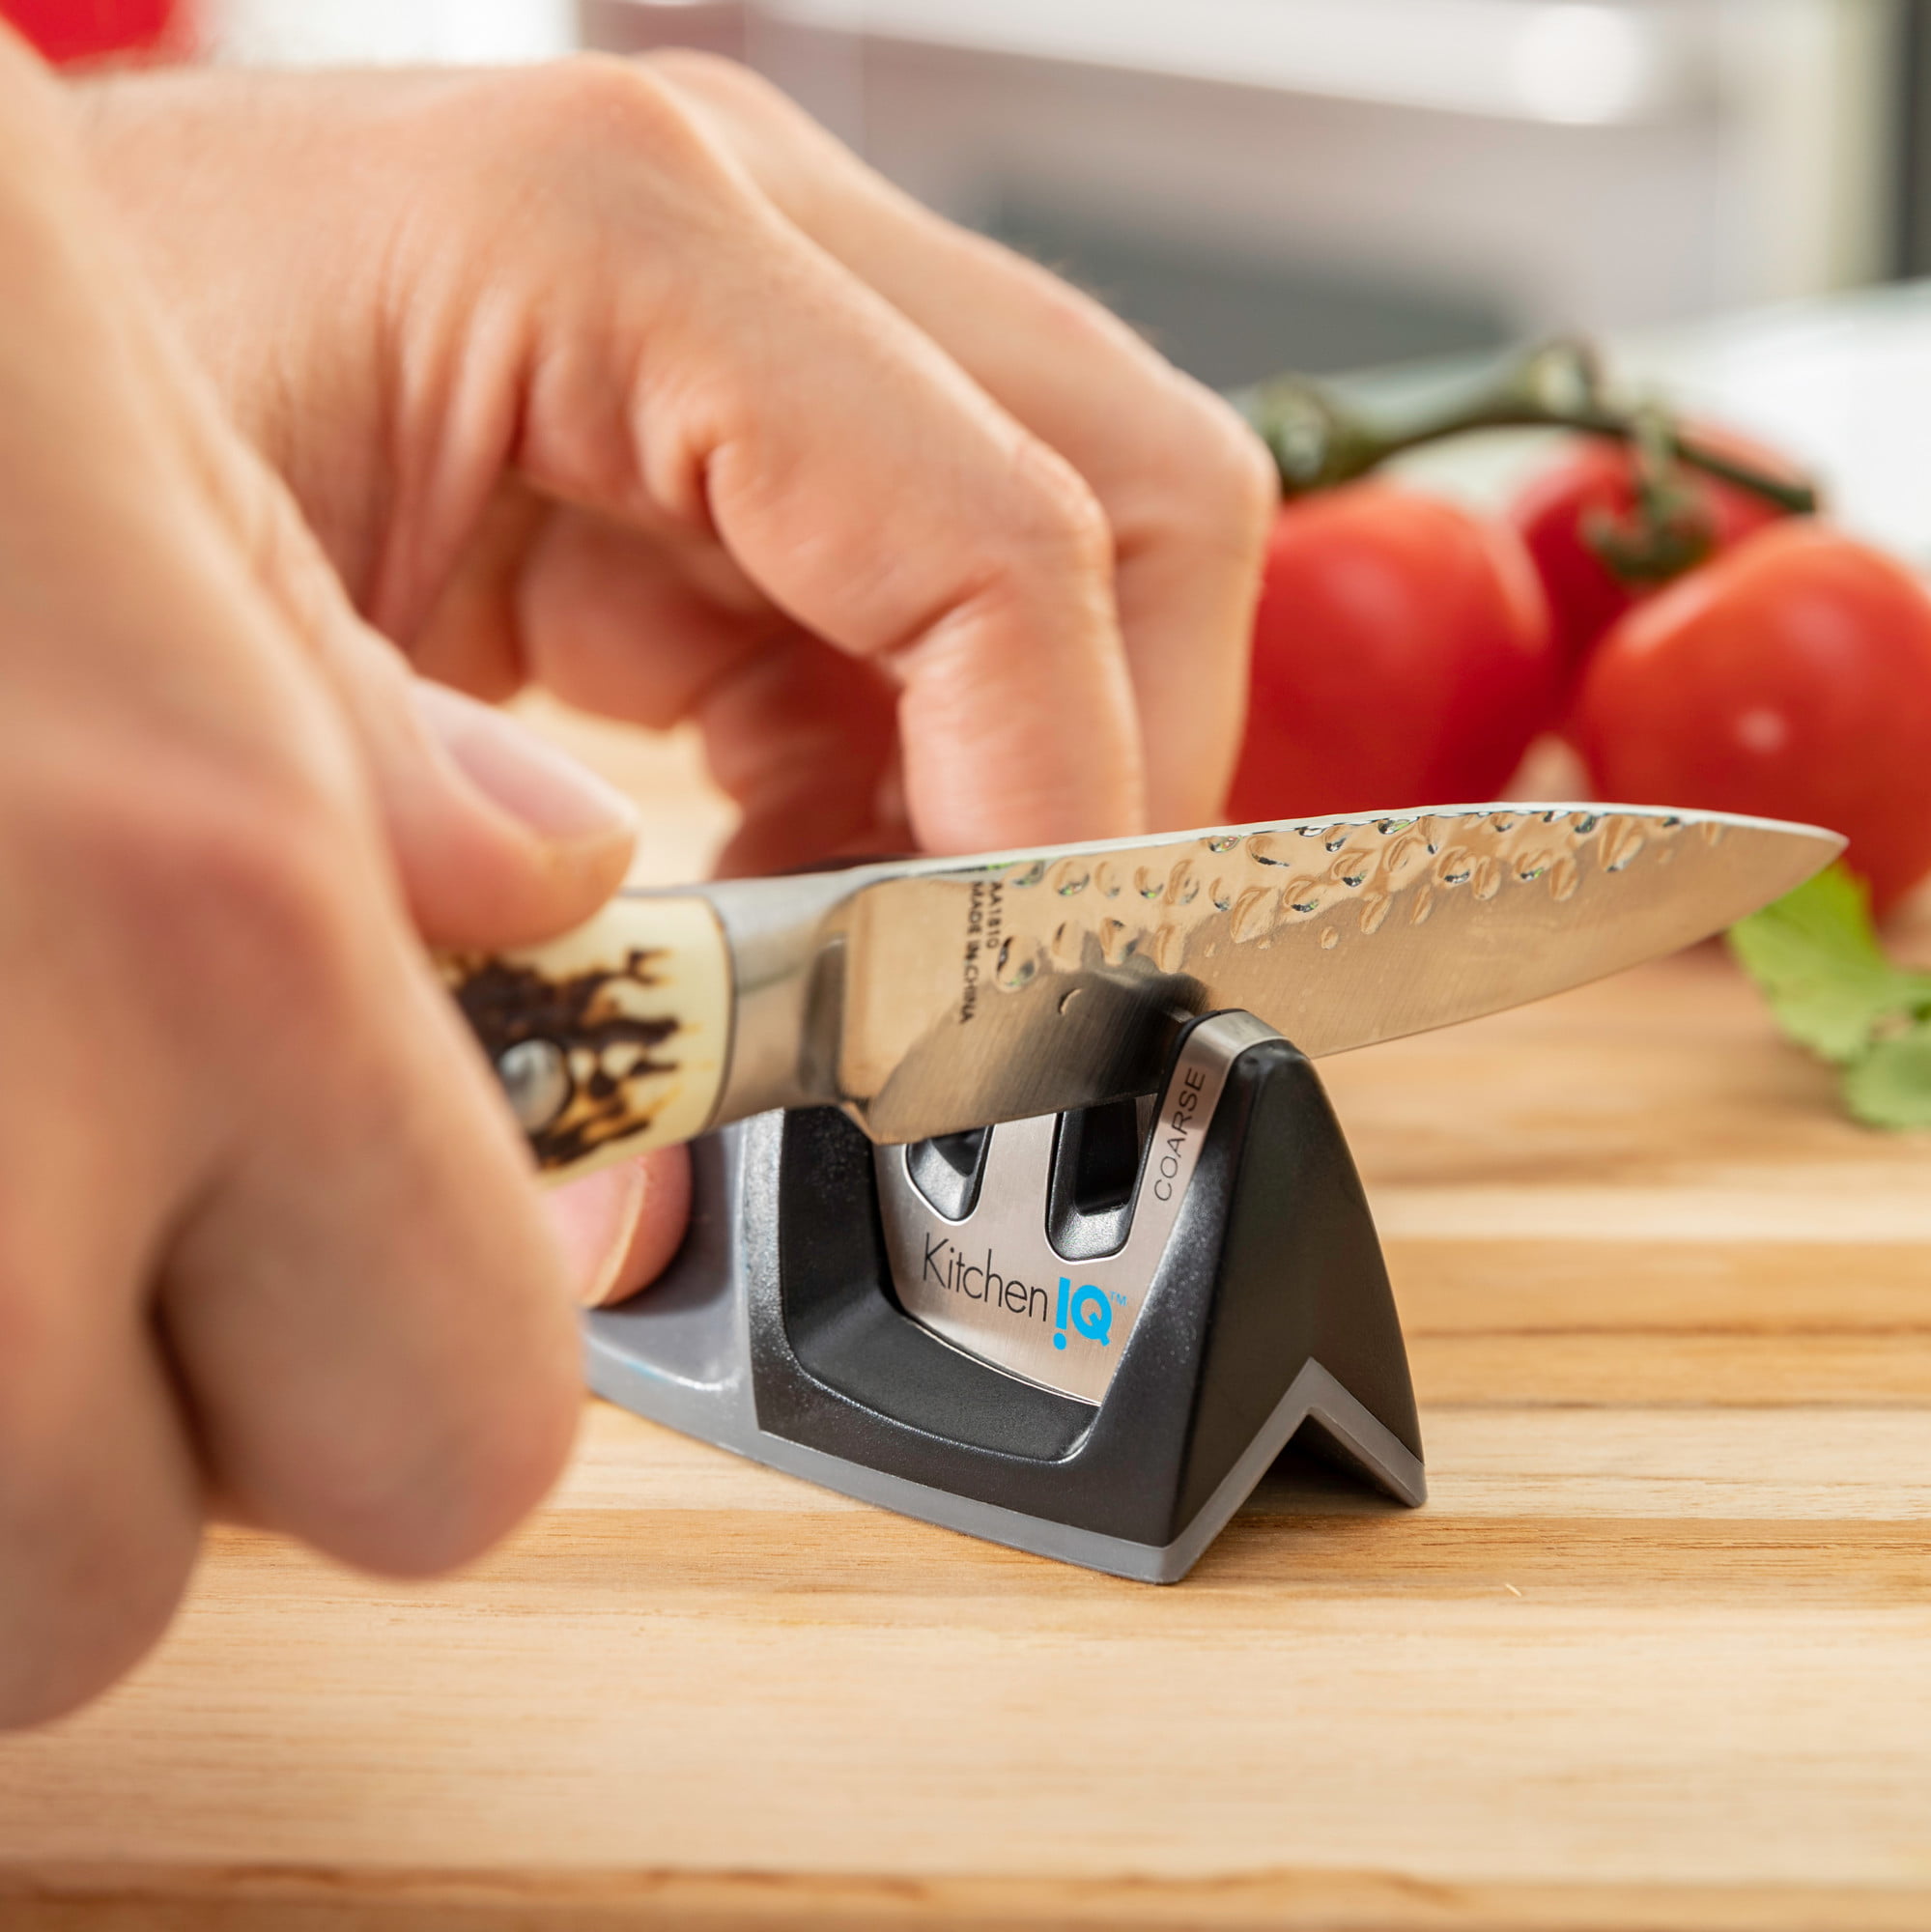  KitchenIQ 50009 Edge Grip 2-Stage Knife Sharpener, Black,  Coarse & Fine Sharpeners, Compact for Easy Storage, Stable Non-Slip Base,  Soft Grip Rubber Handle, Straight & Serrated Knives: Home & Kitchen